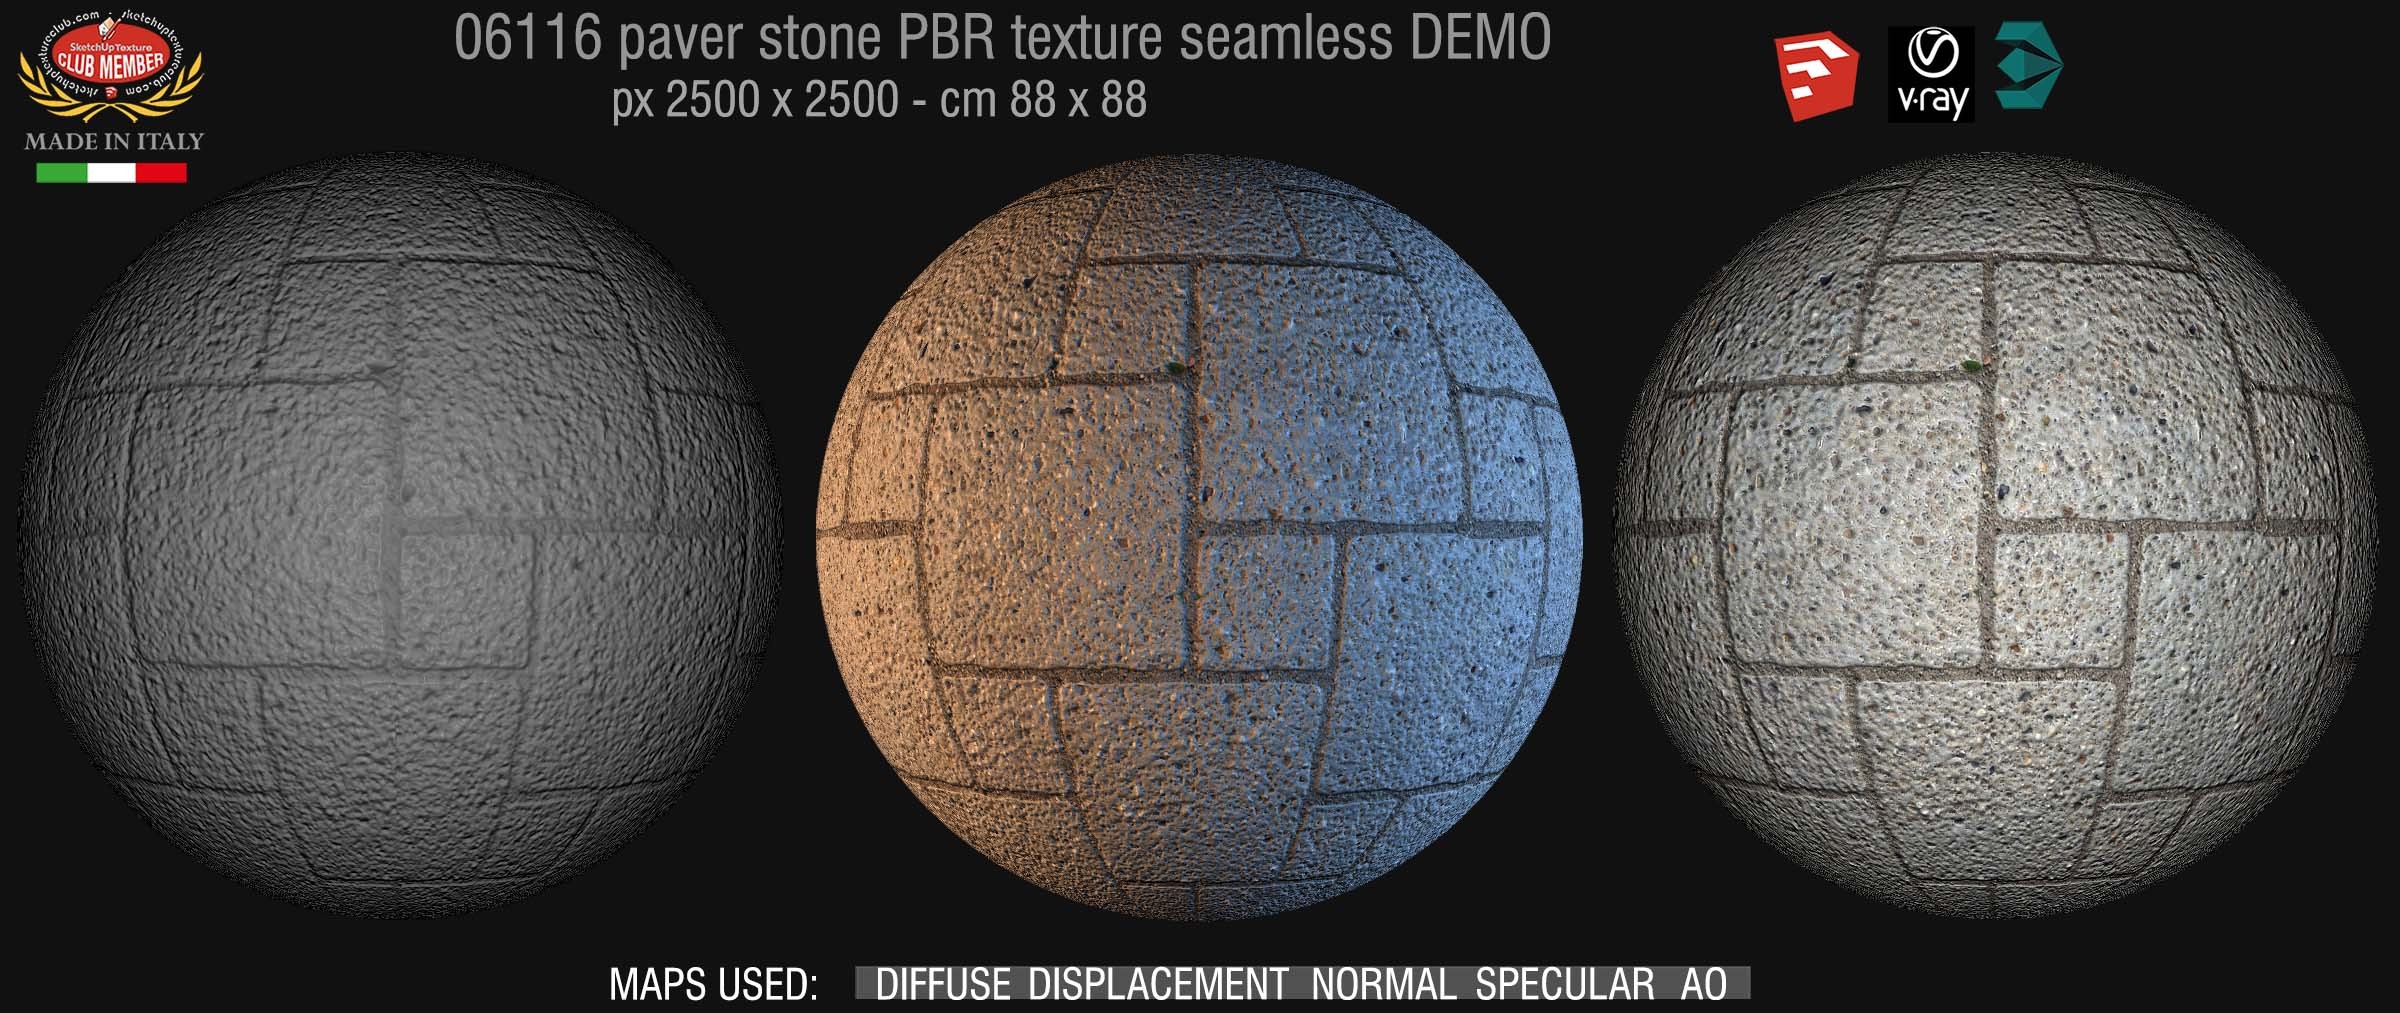 06116 paver stone PBR texture seamless DEMO